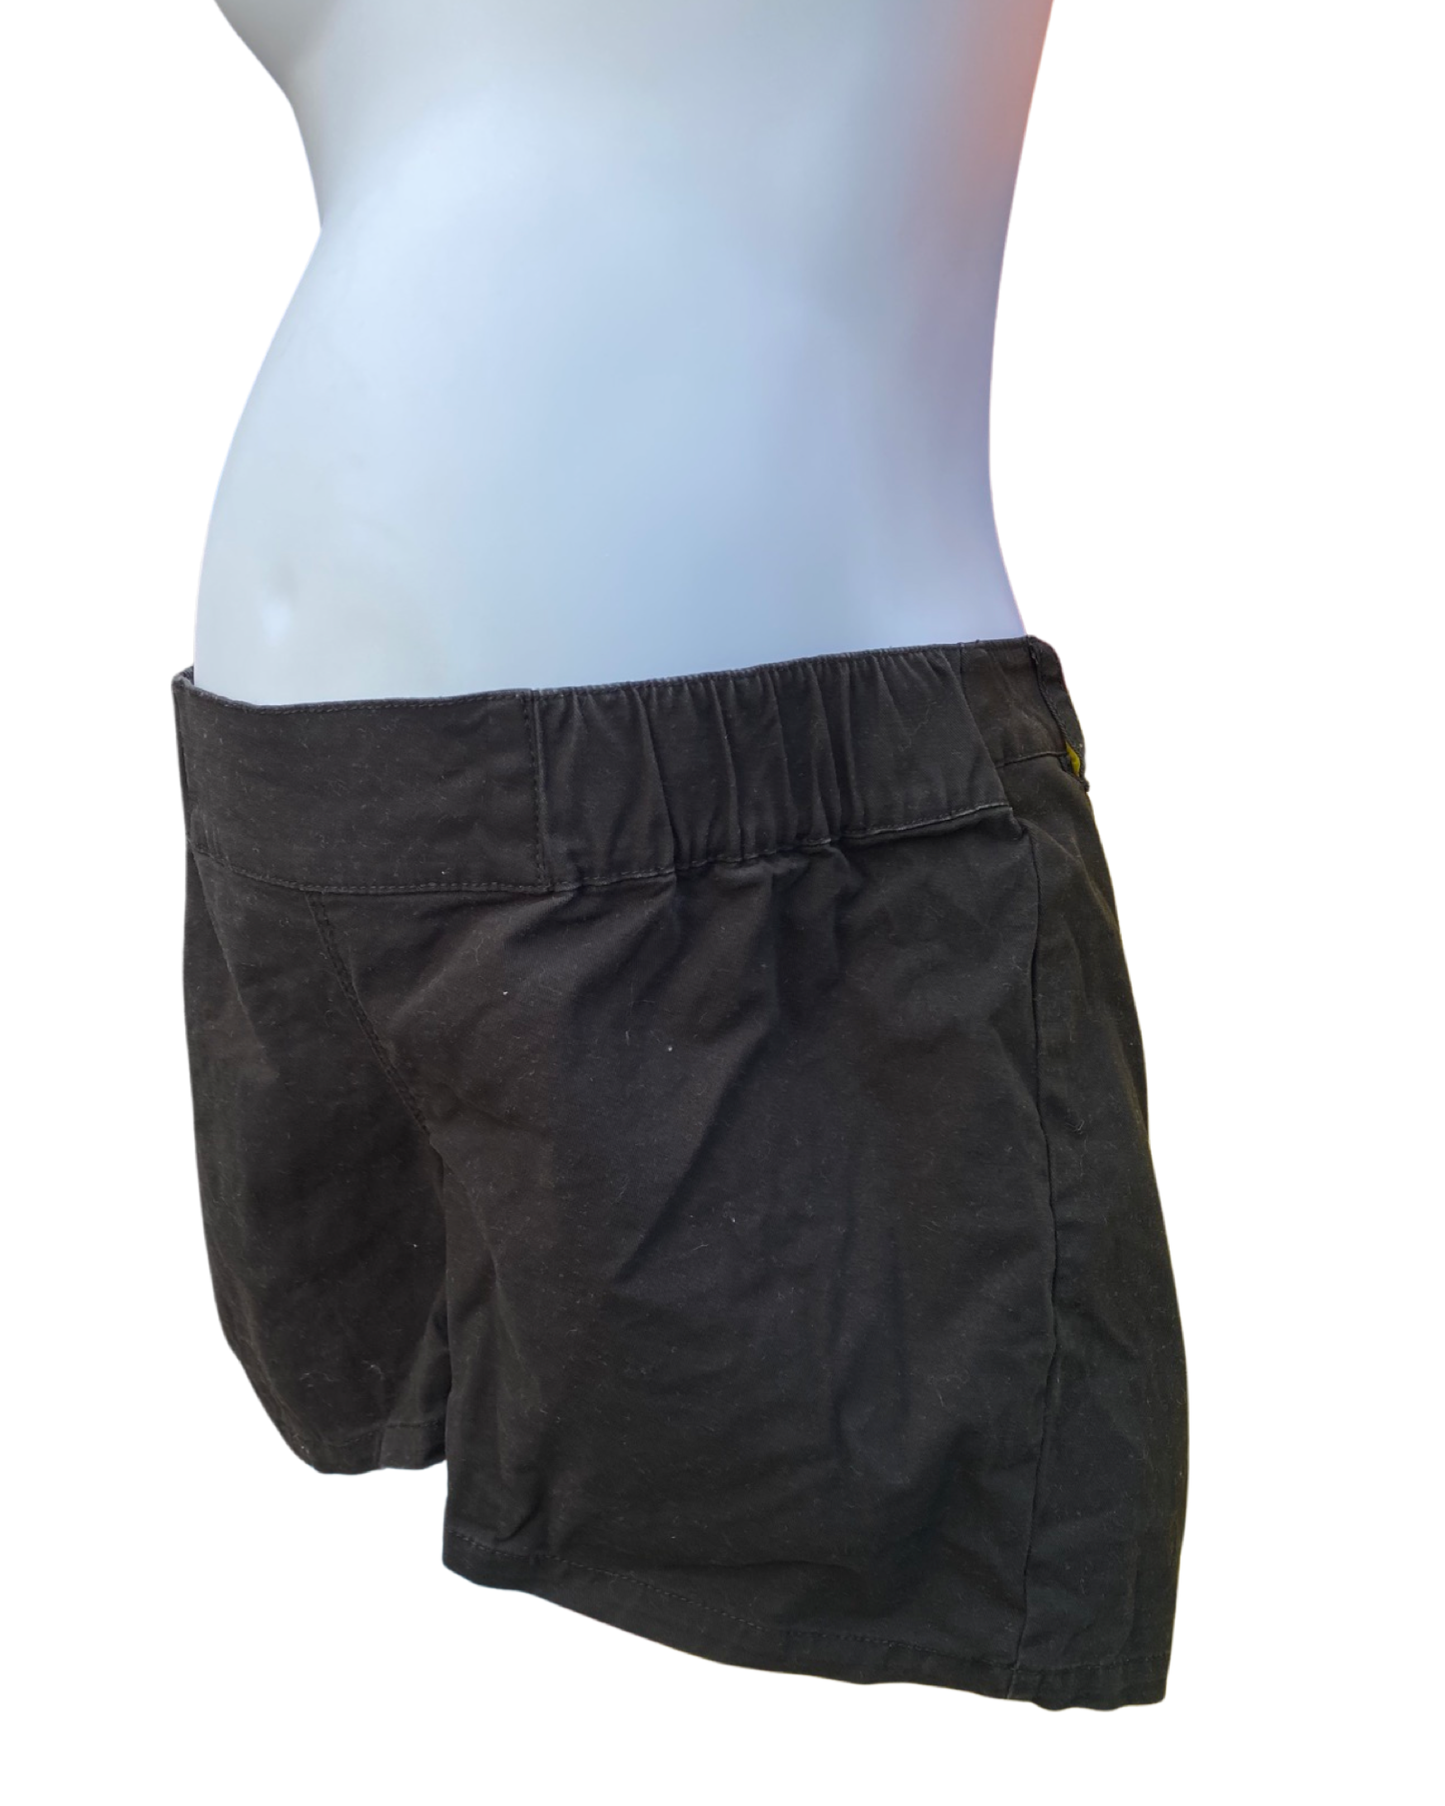 ASOS maternity black cotton shorts (size 10)